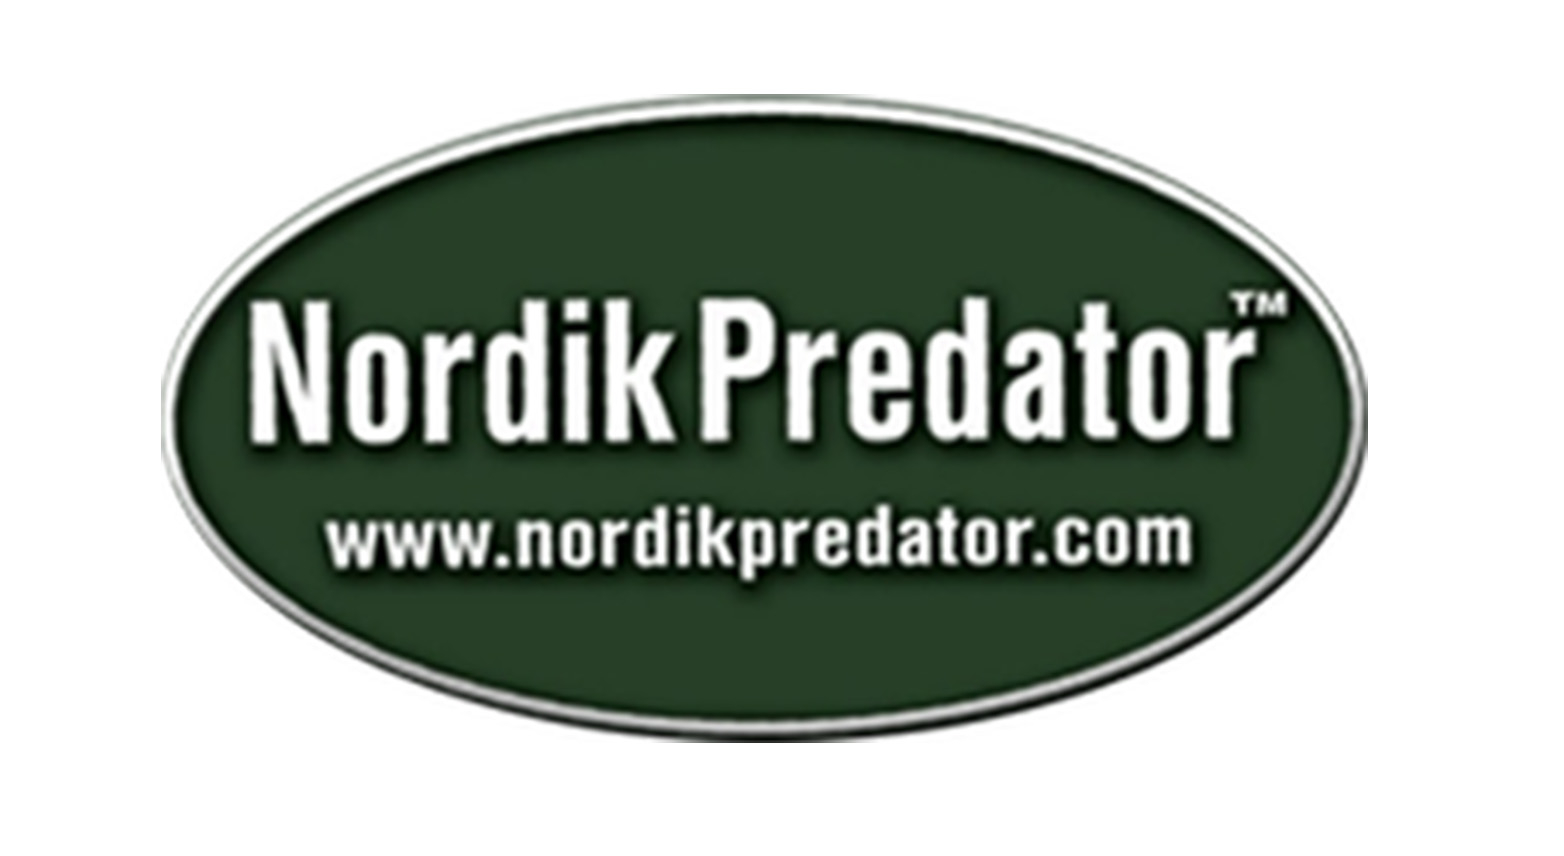 Monture Nordik Predator